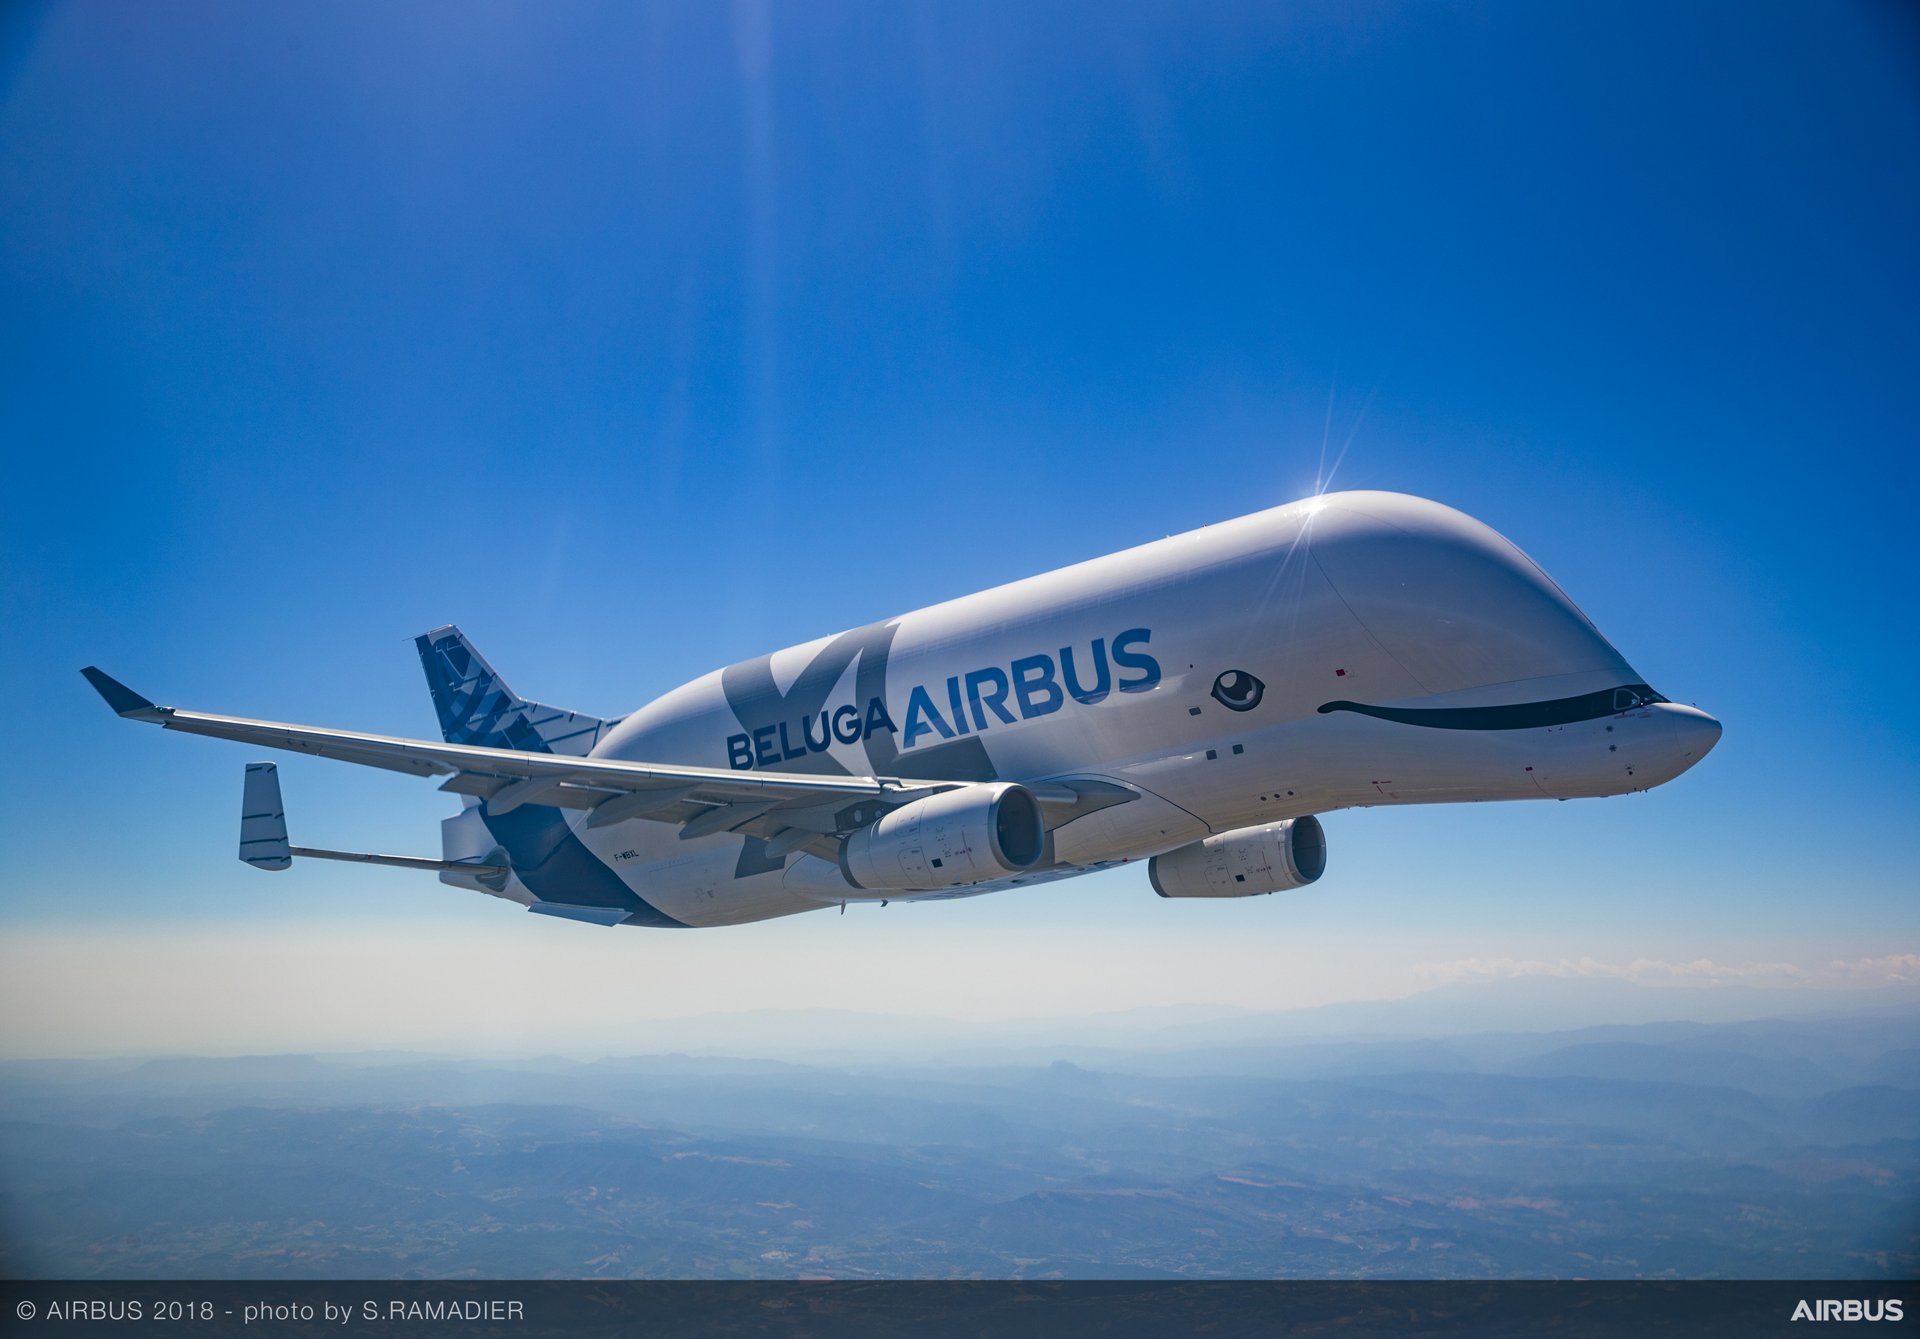 Airbus Home Aerospace Pioneer